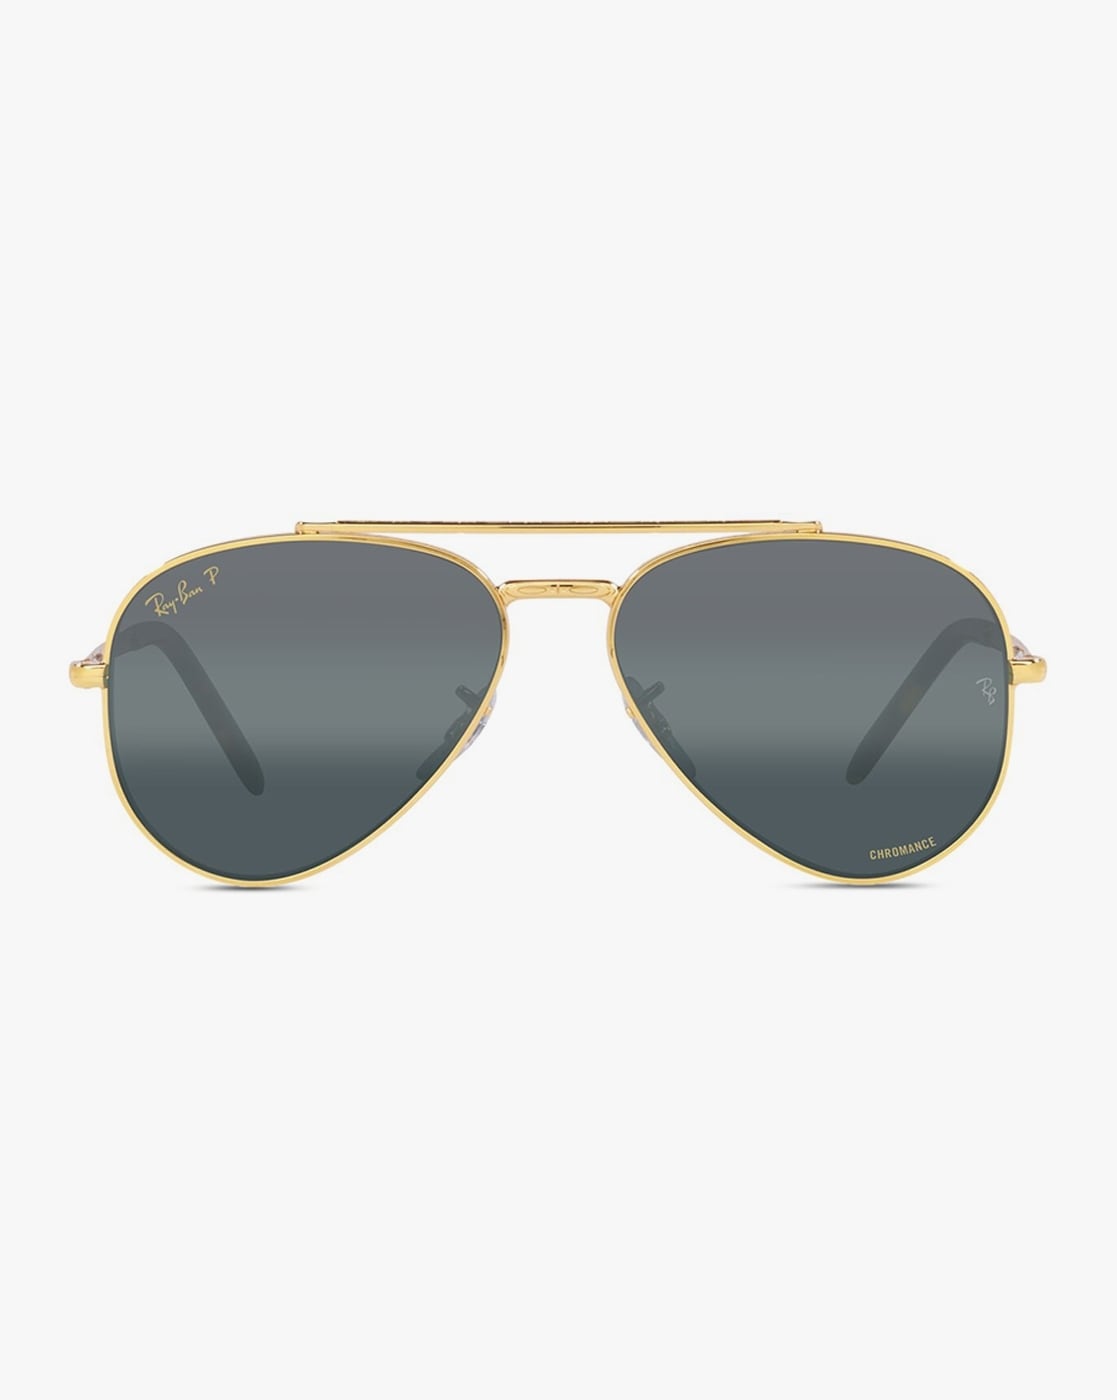 KDEAM Men's Polarized Sunglasses Fishing Lifestyles Mirrored Color Blocking Sun  Glasses Women Legend Square Sunglass With Box